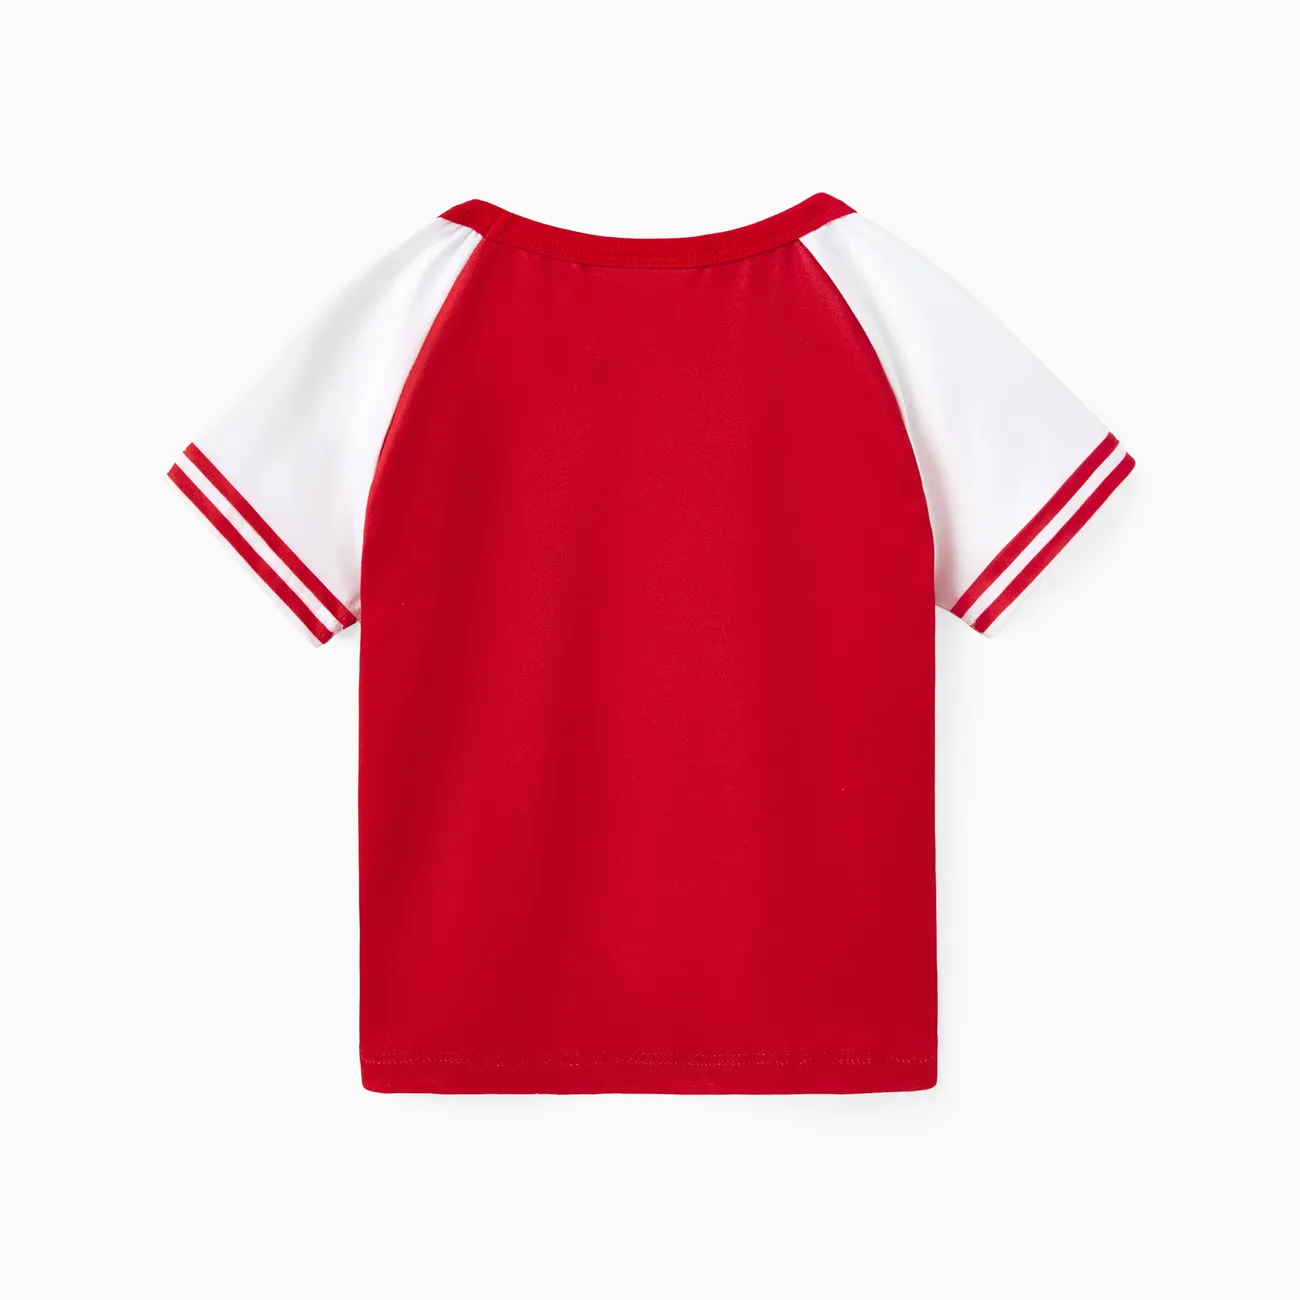 Looney Tunes Unisex Infantil Camiseta rojo blanco big image 1